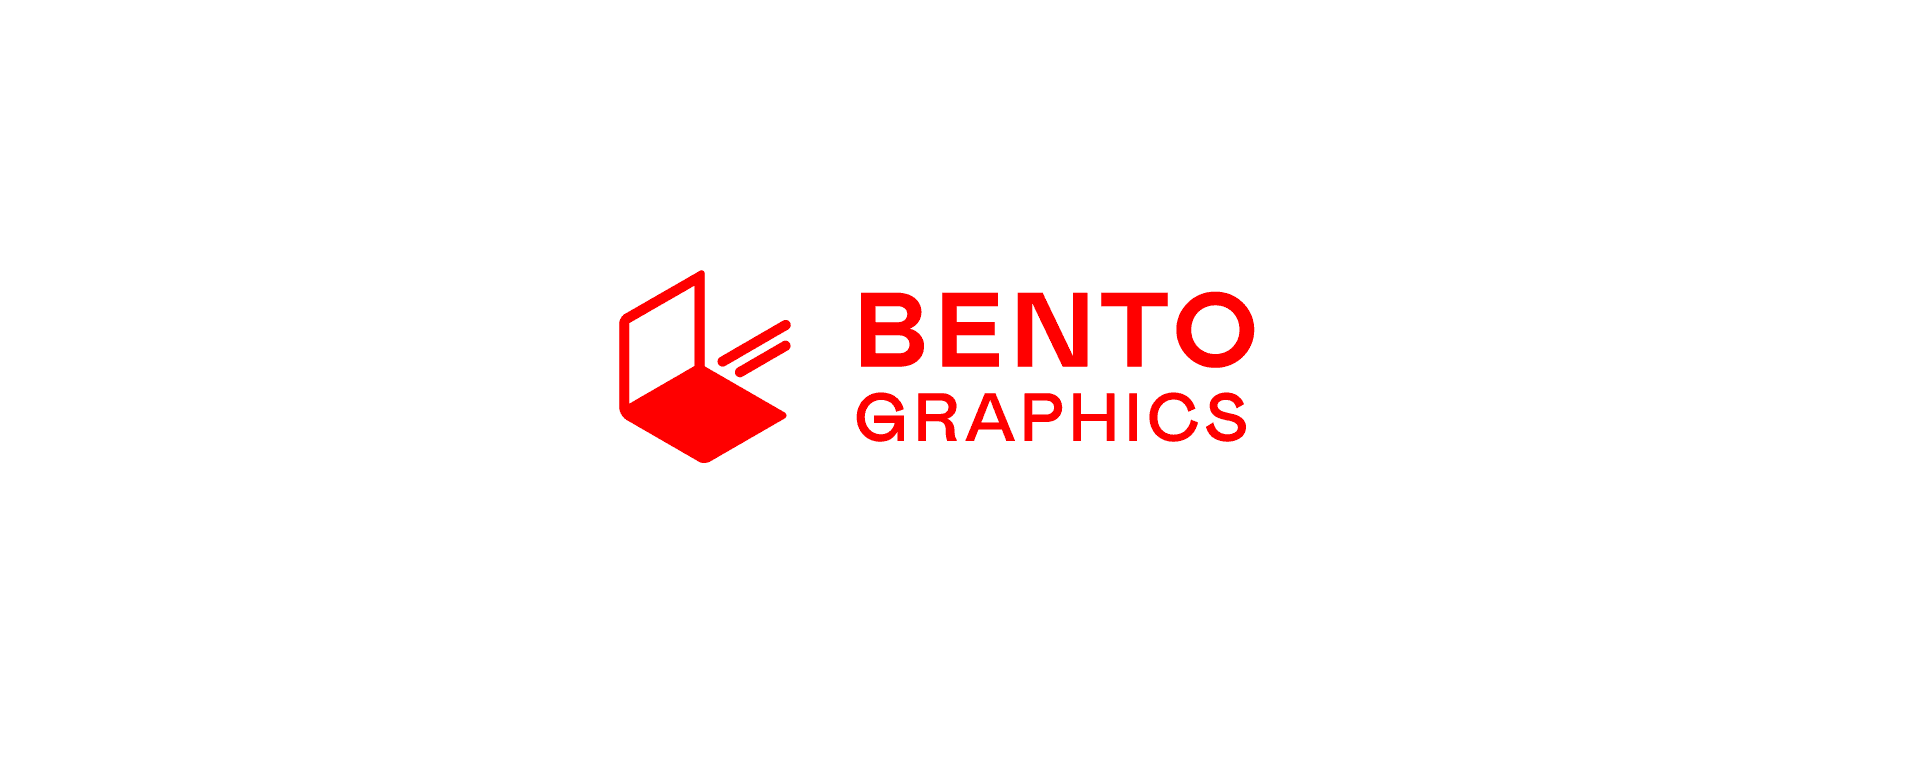 Bento Graphics - Branding Update - Mabry Font